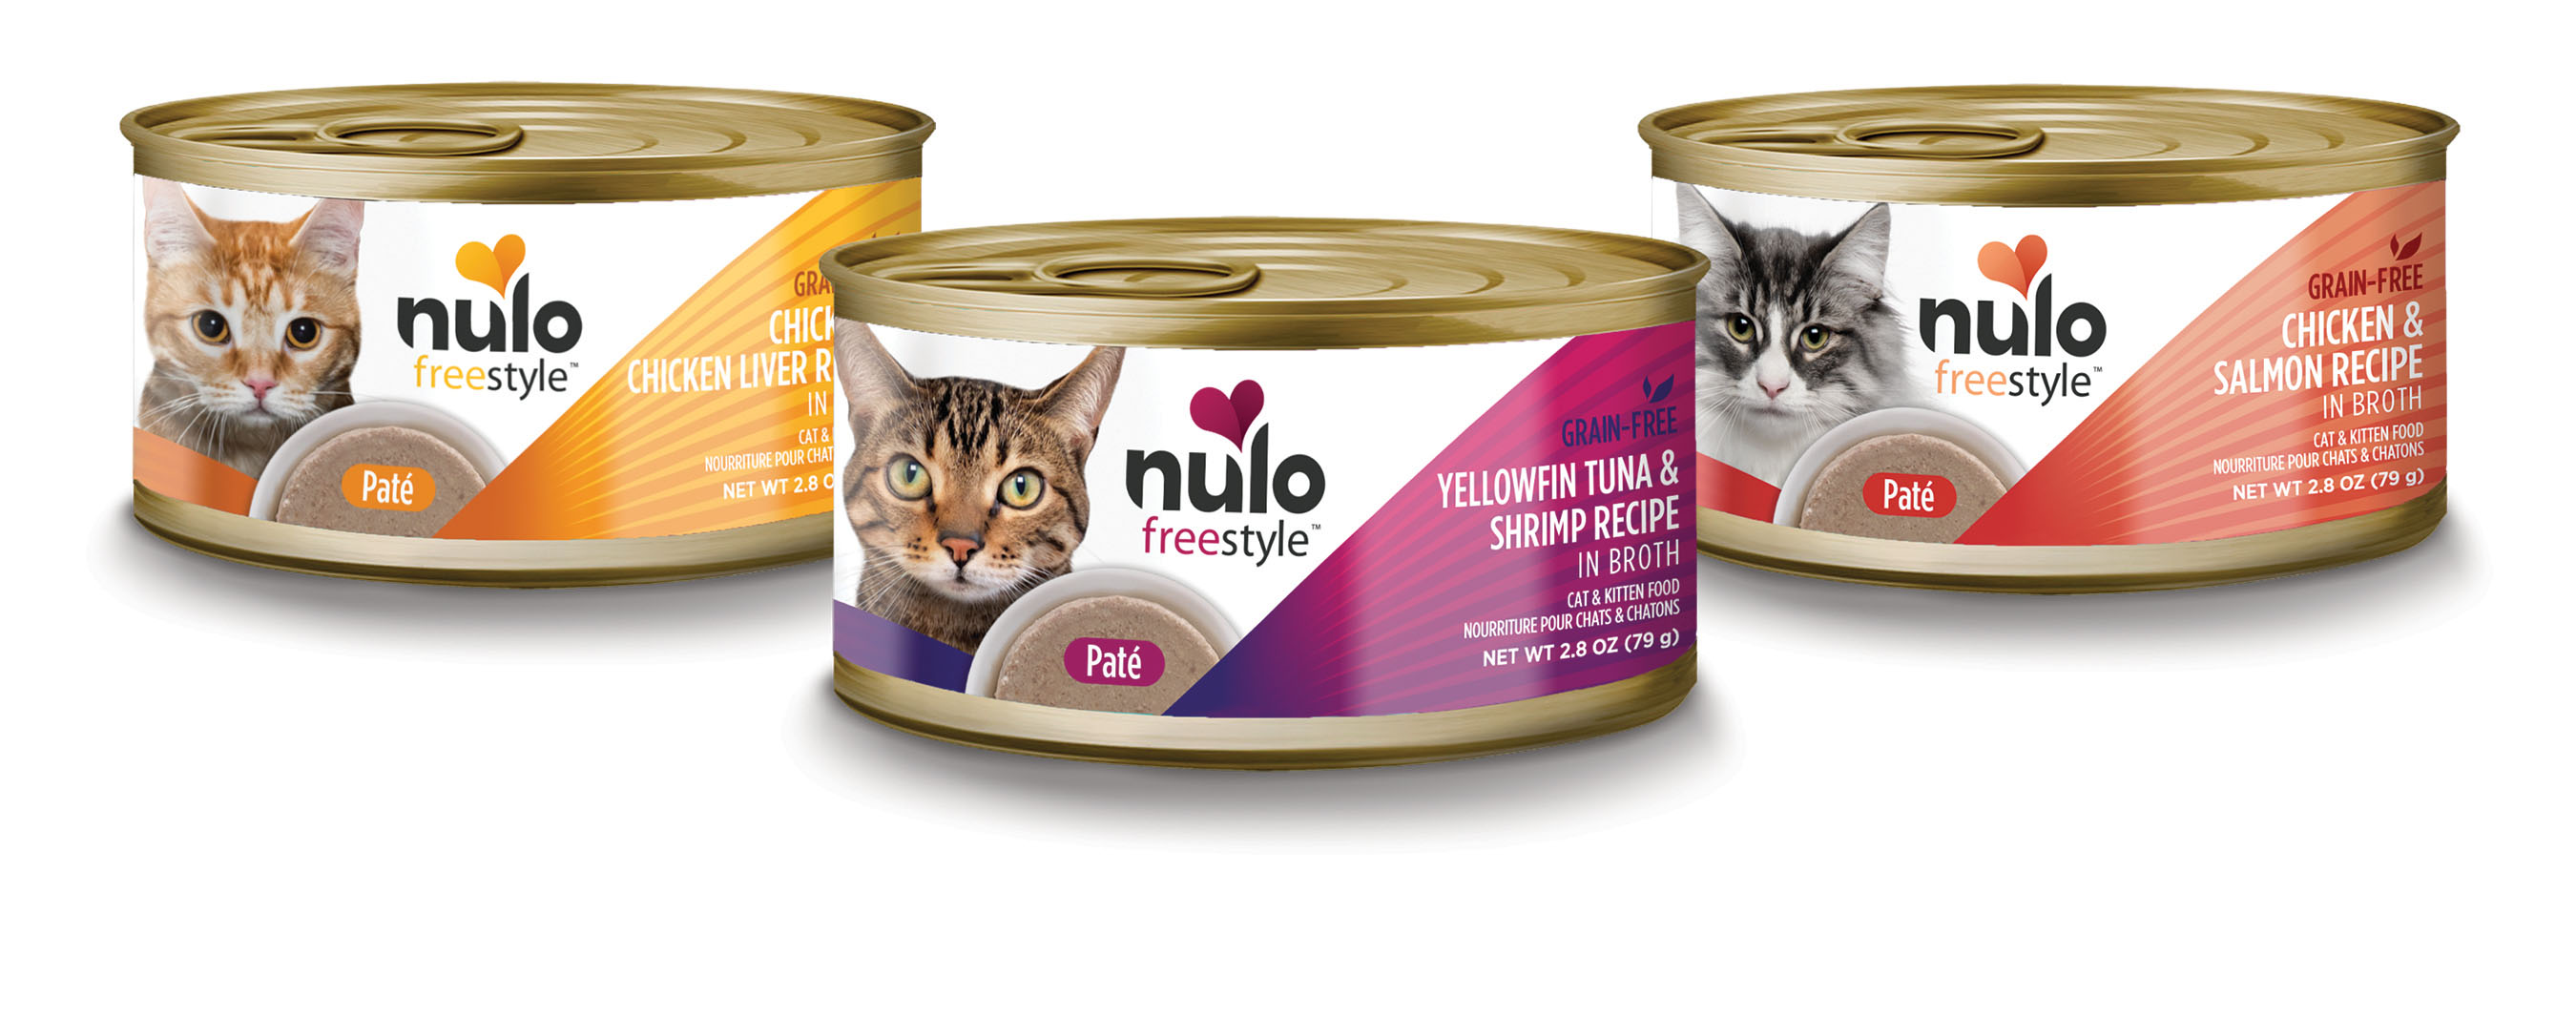 Nulo's pate cat food formulas